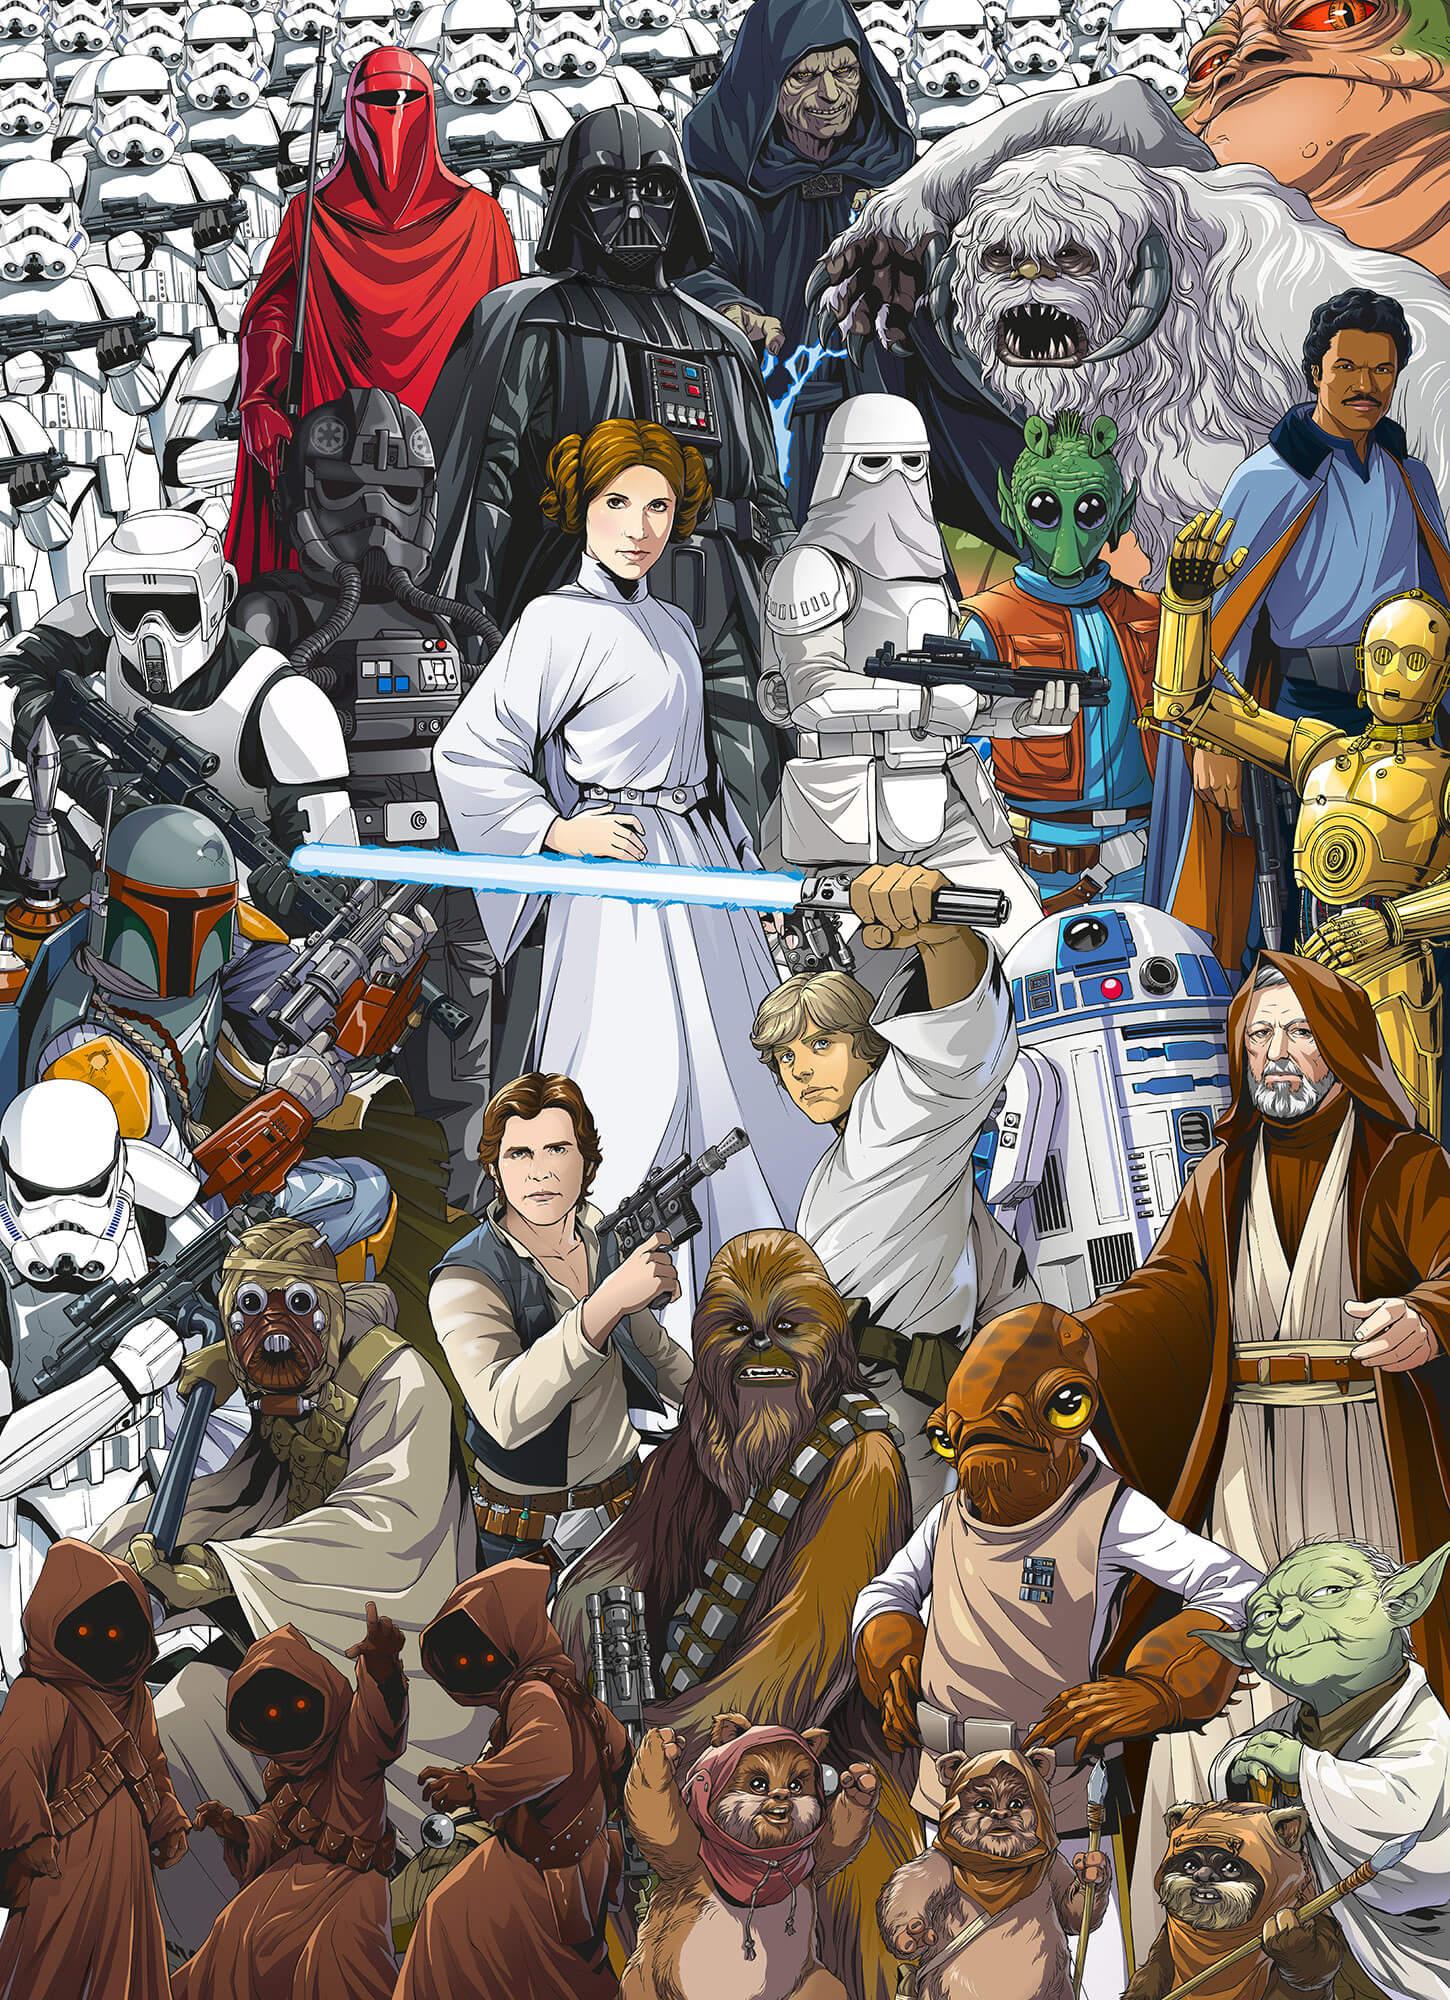 Star Wars Collage Wallpaper